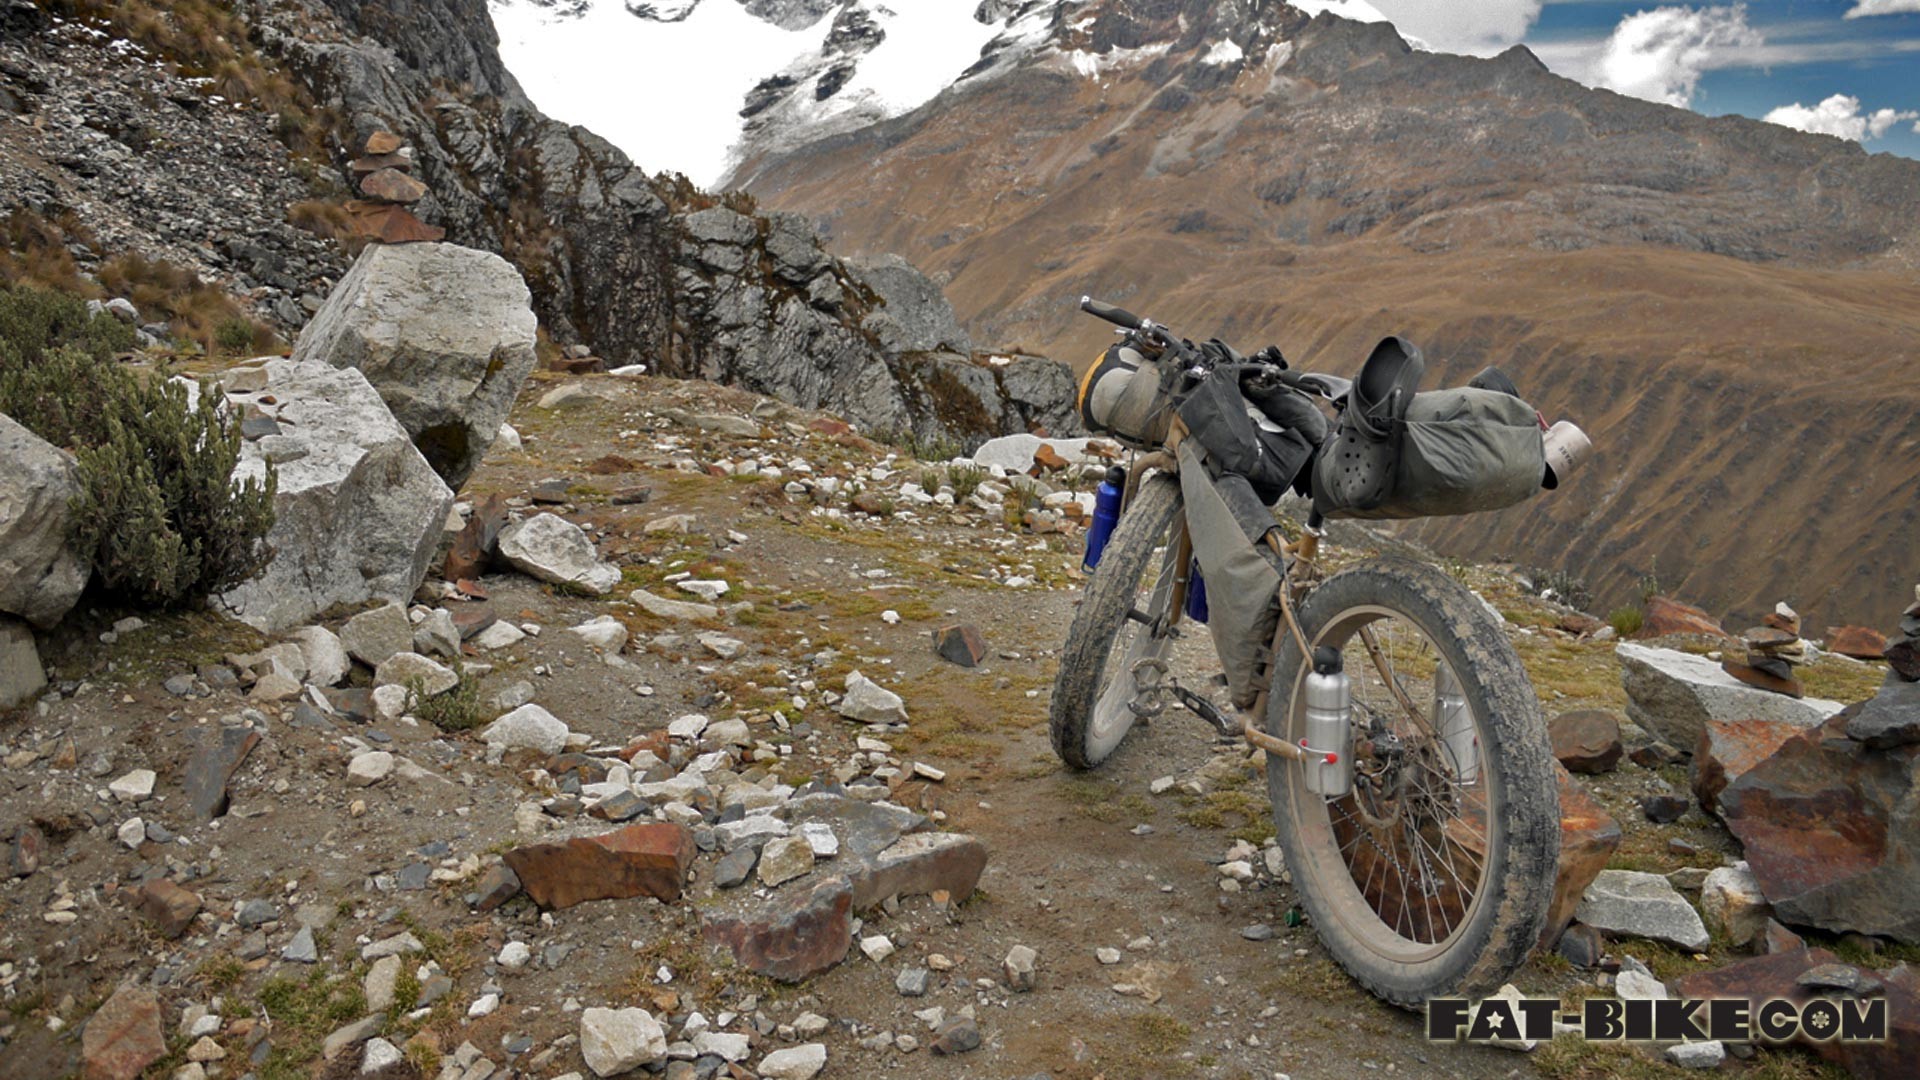 1920x1080 Wallpaper Wednesday – Fat-bike in Peru